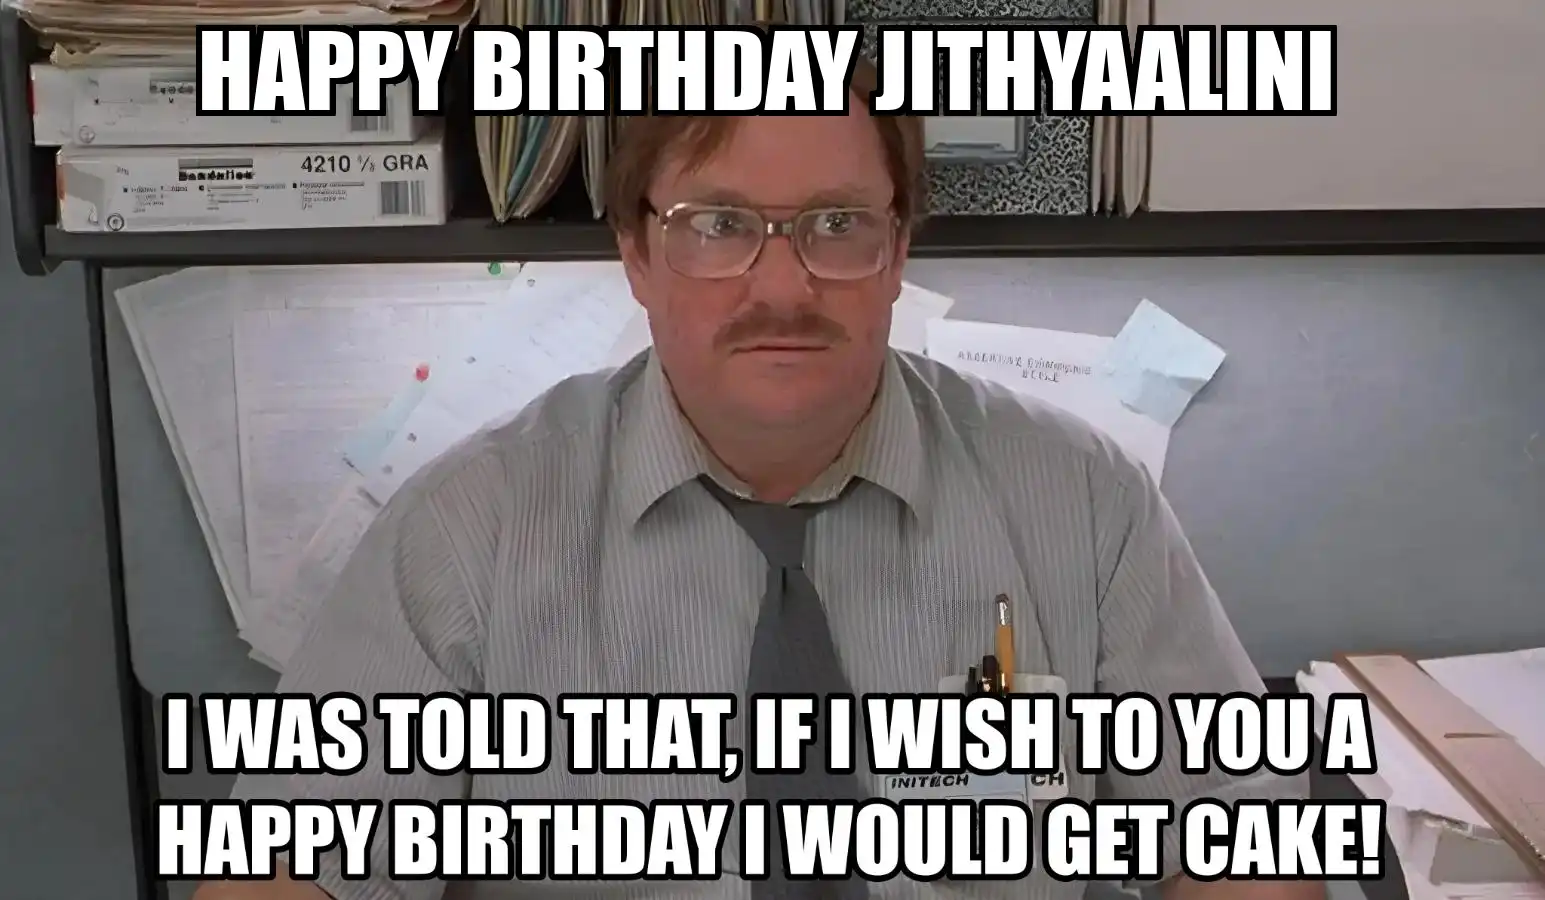 Happy Birthday Jithyaalini I Would Get A Cake Meme